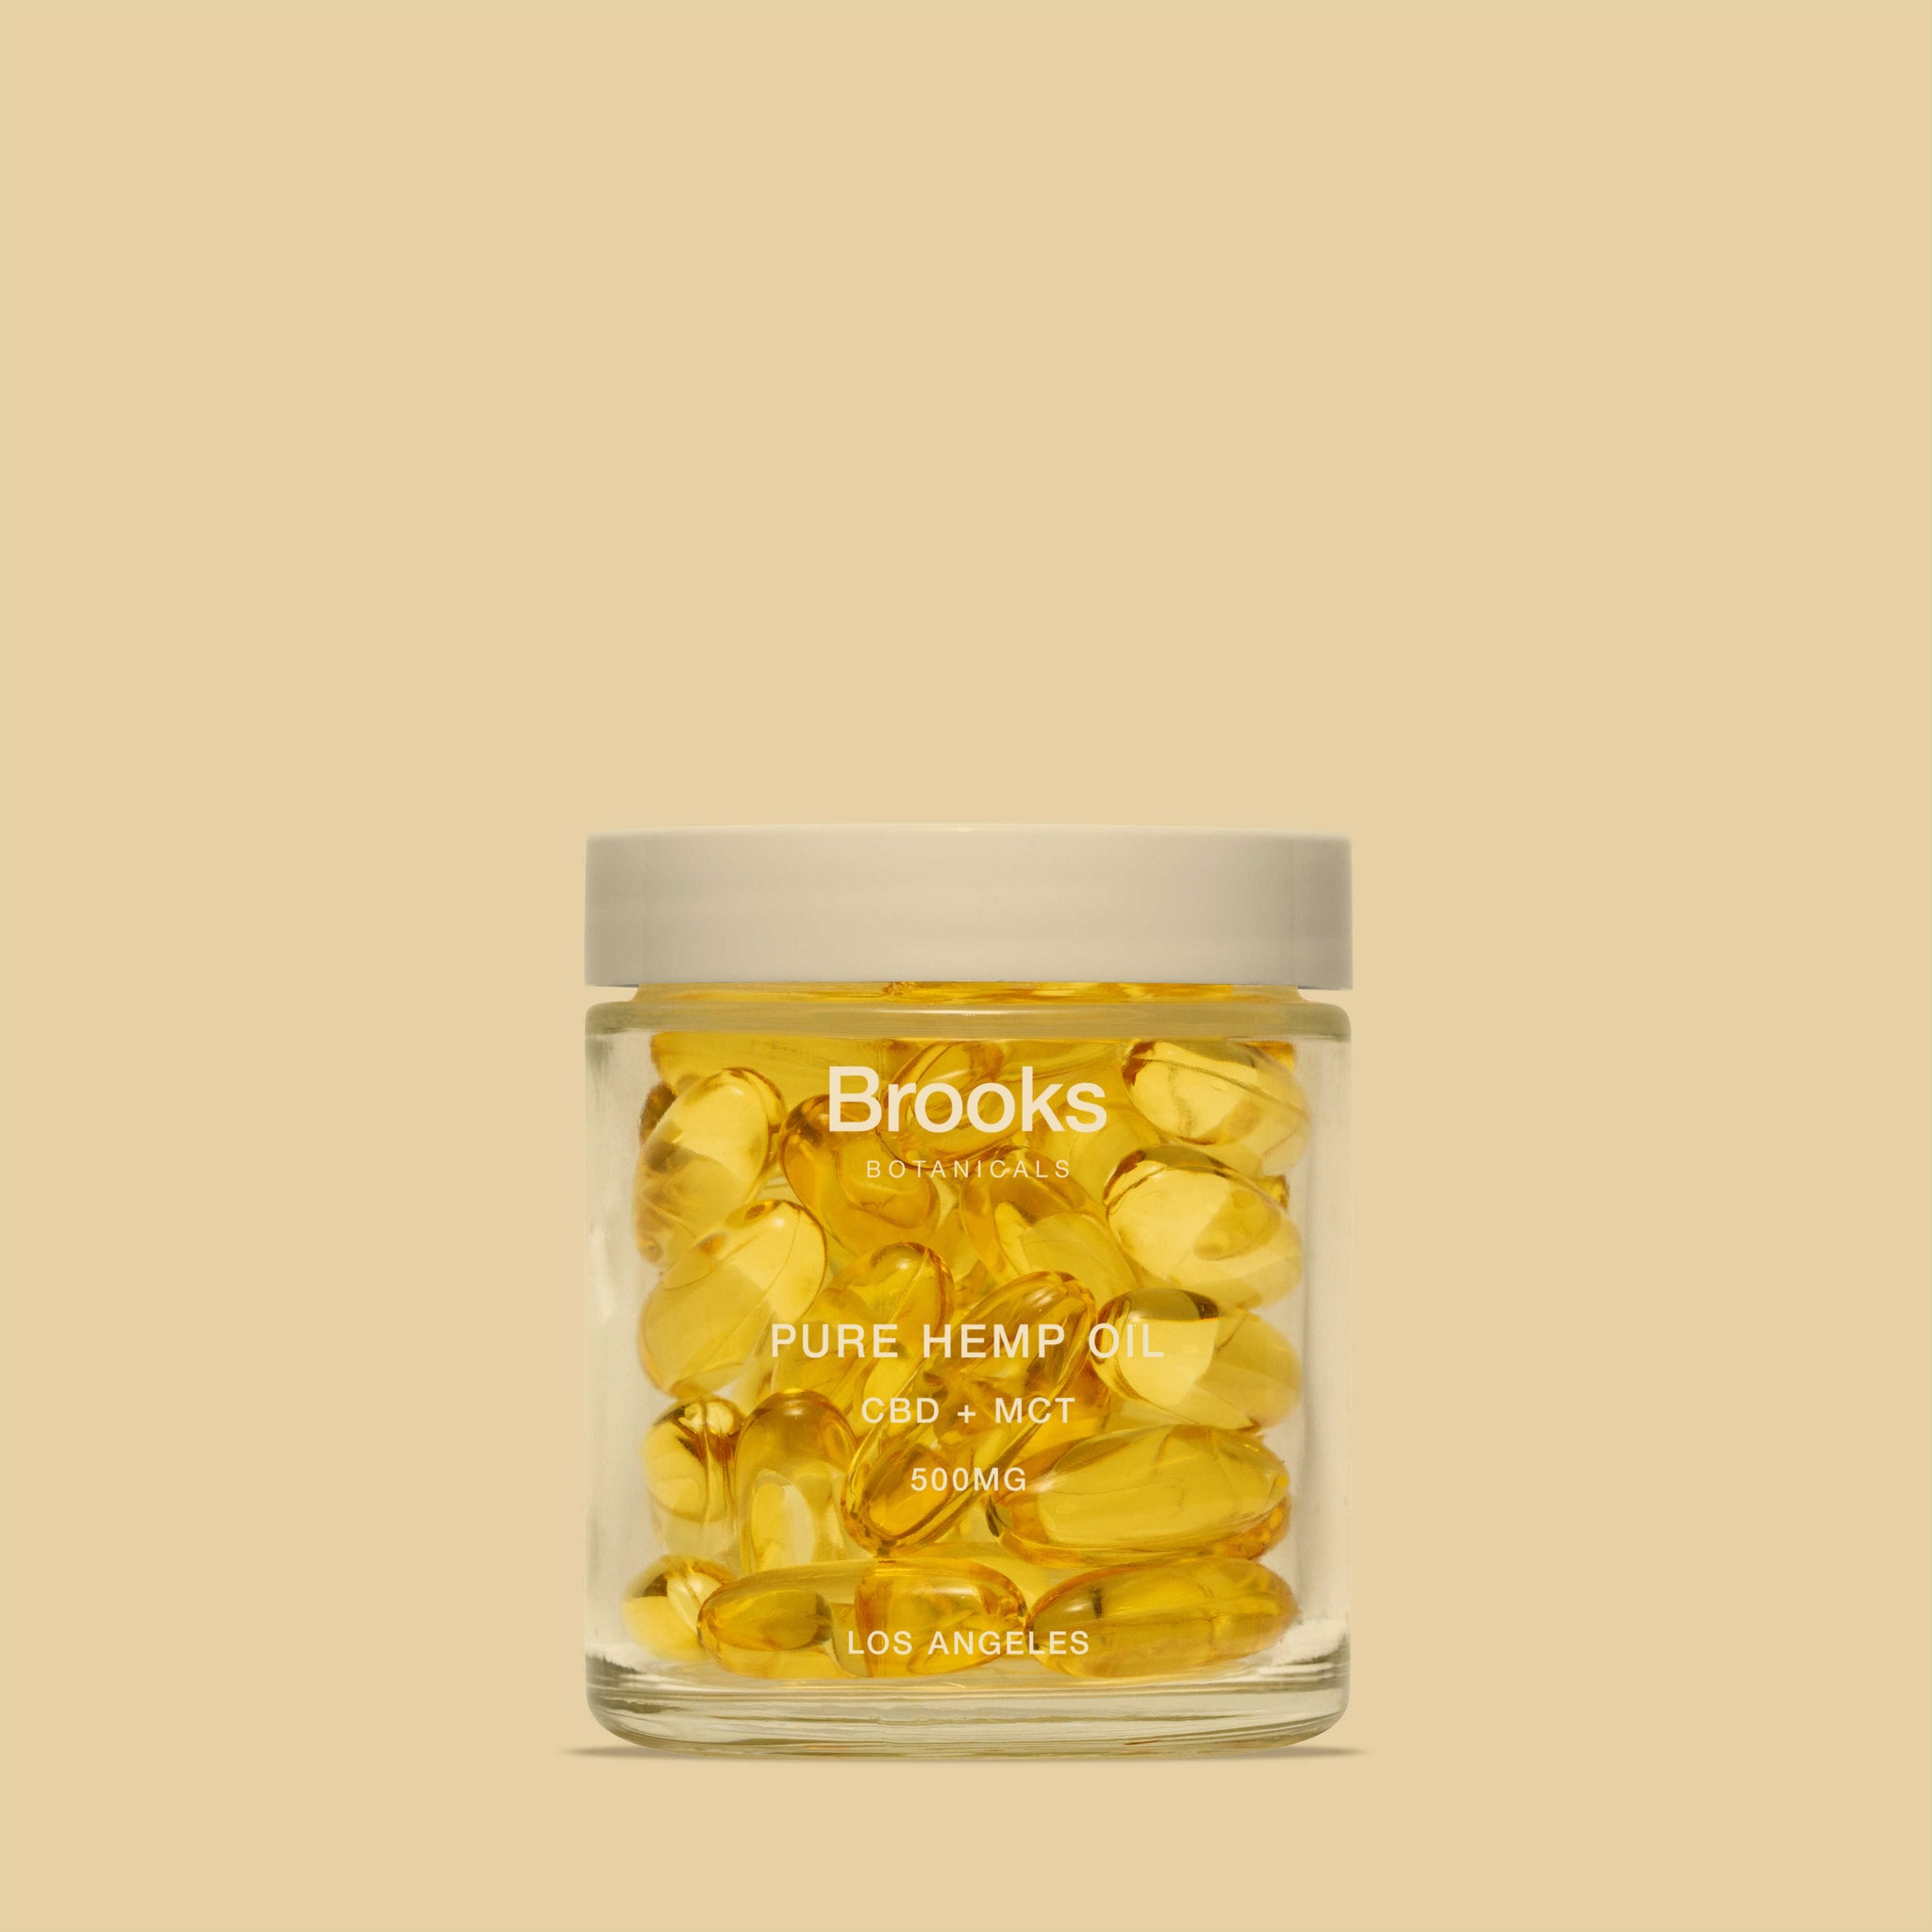 Vitamin Jar Mockup No. 1 - Copal Studio Packaging Mockups For Designers